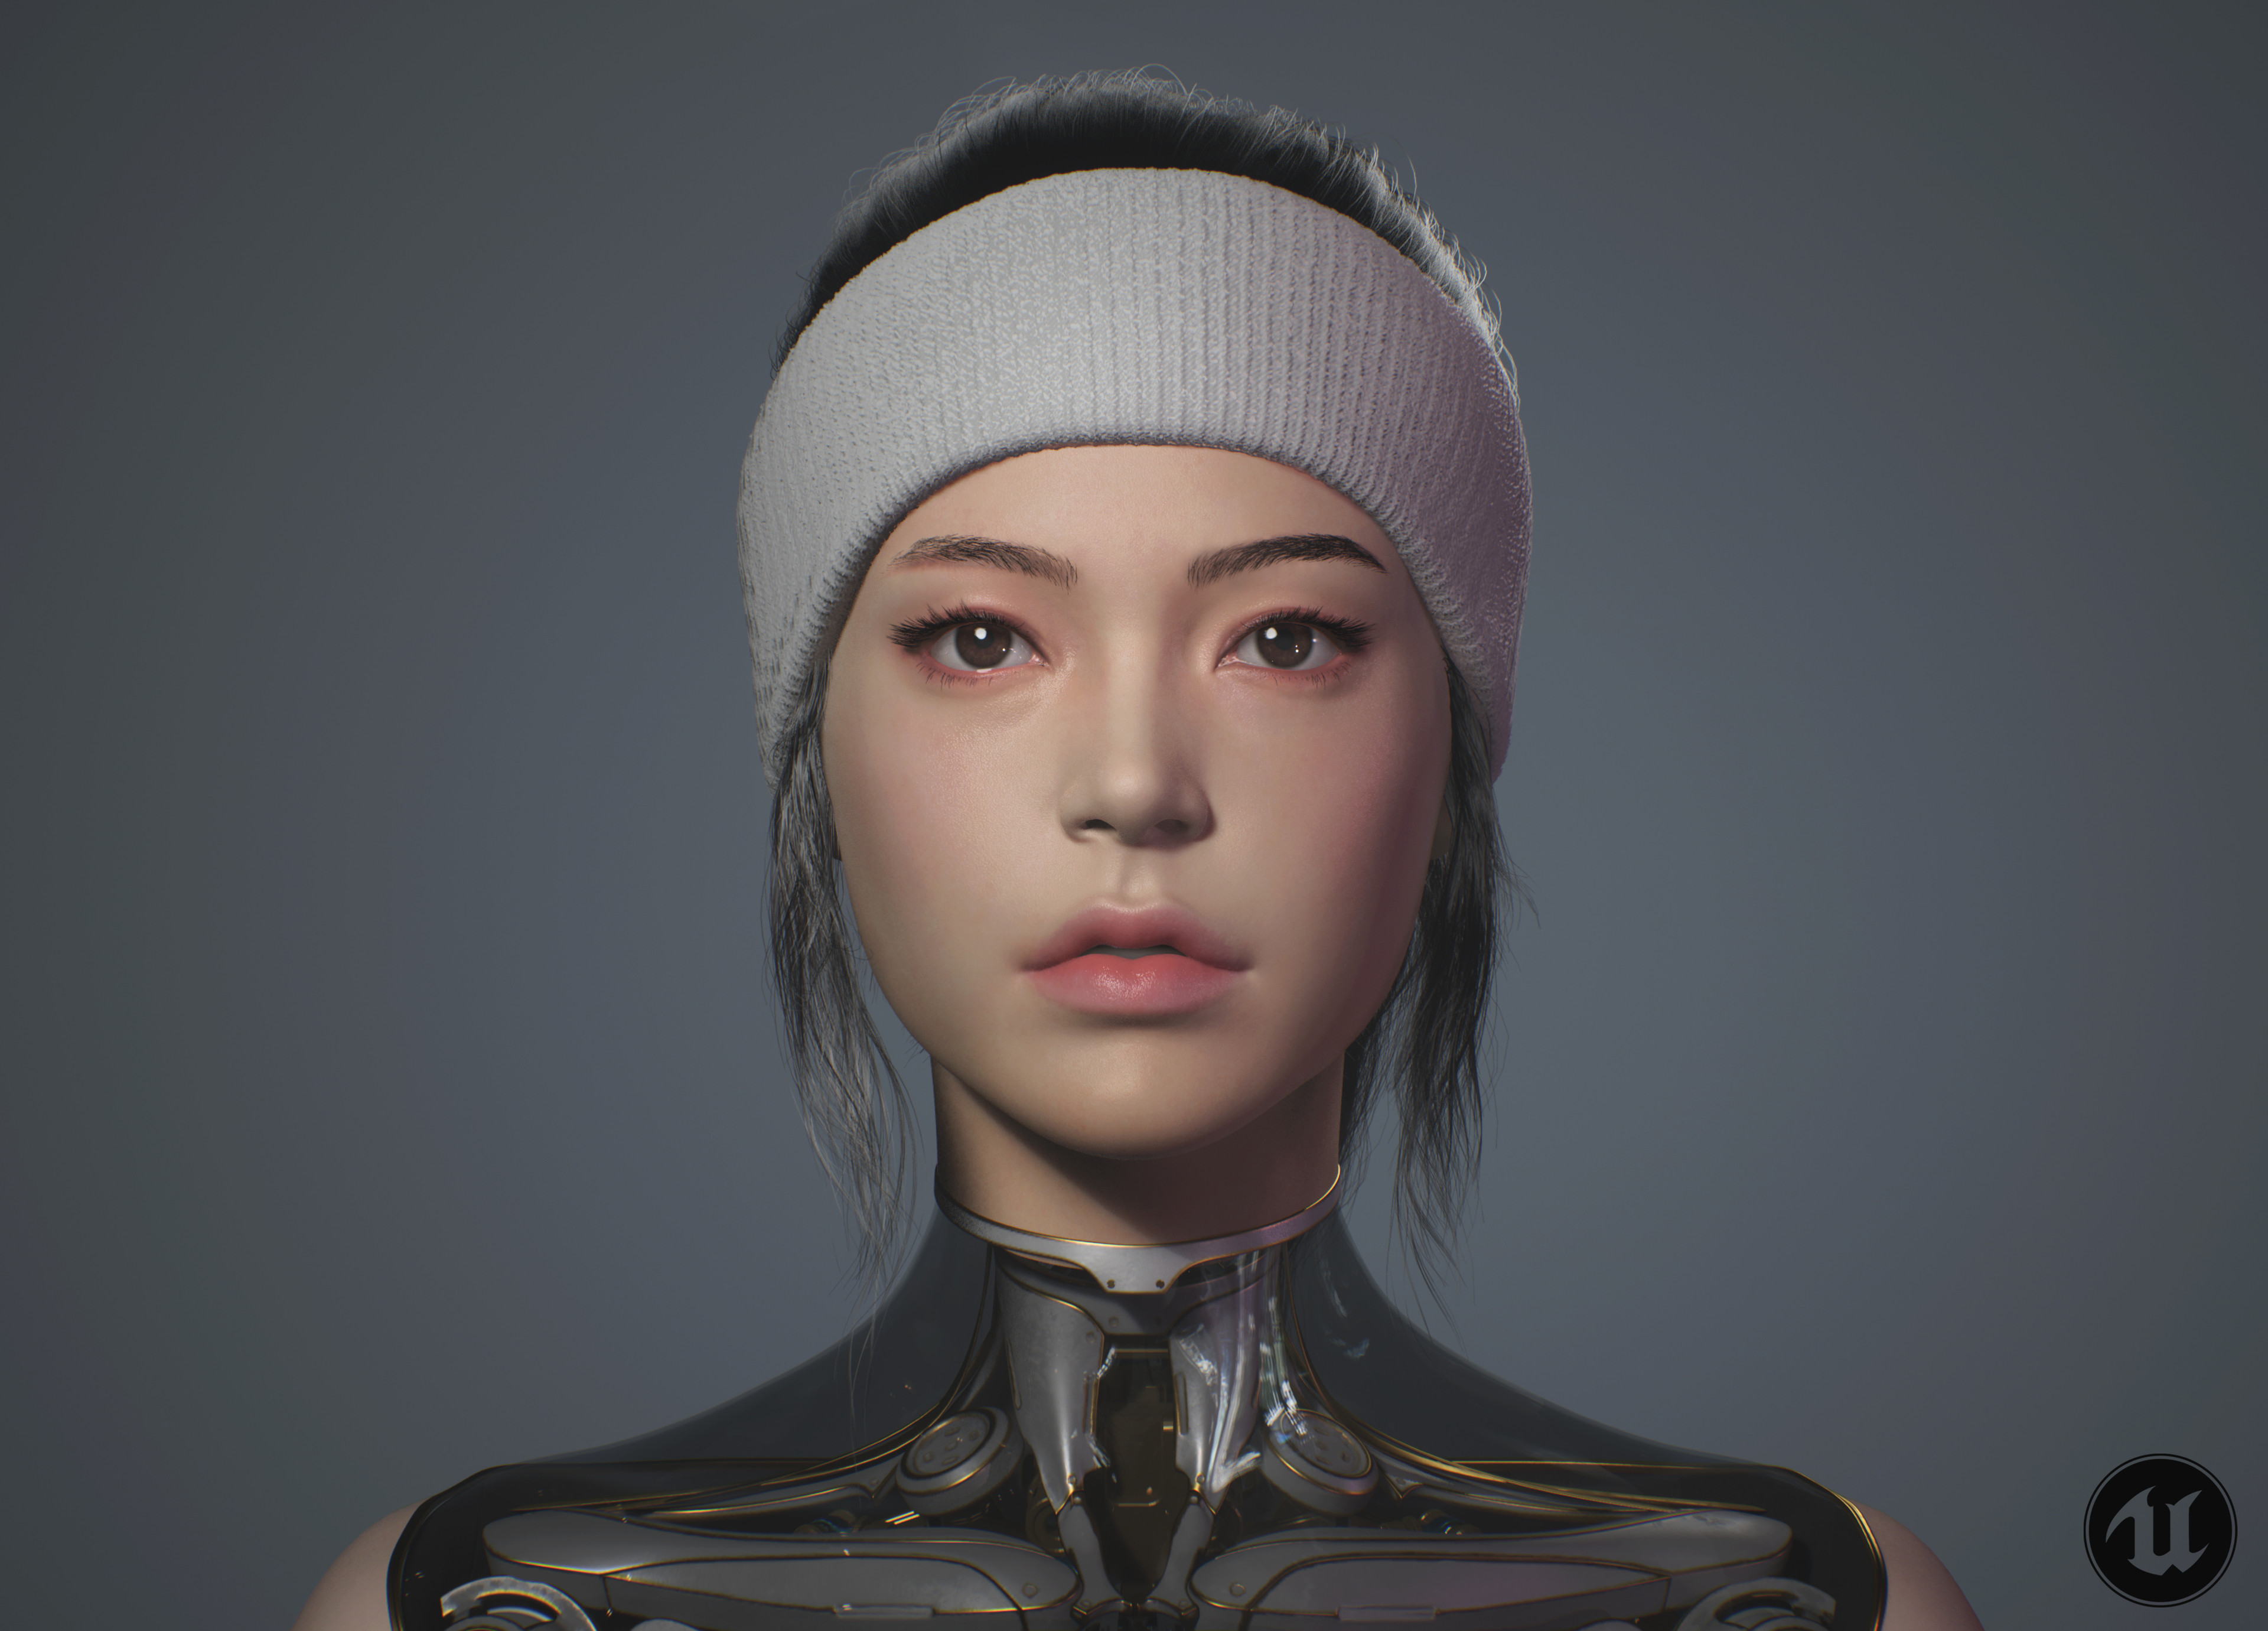 General 3840x2761 women Asian CGI digital art gray background simple background face portrait machine cyborg